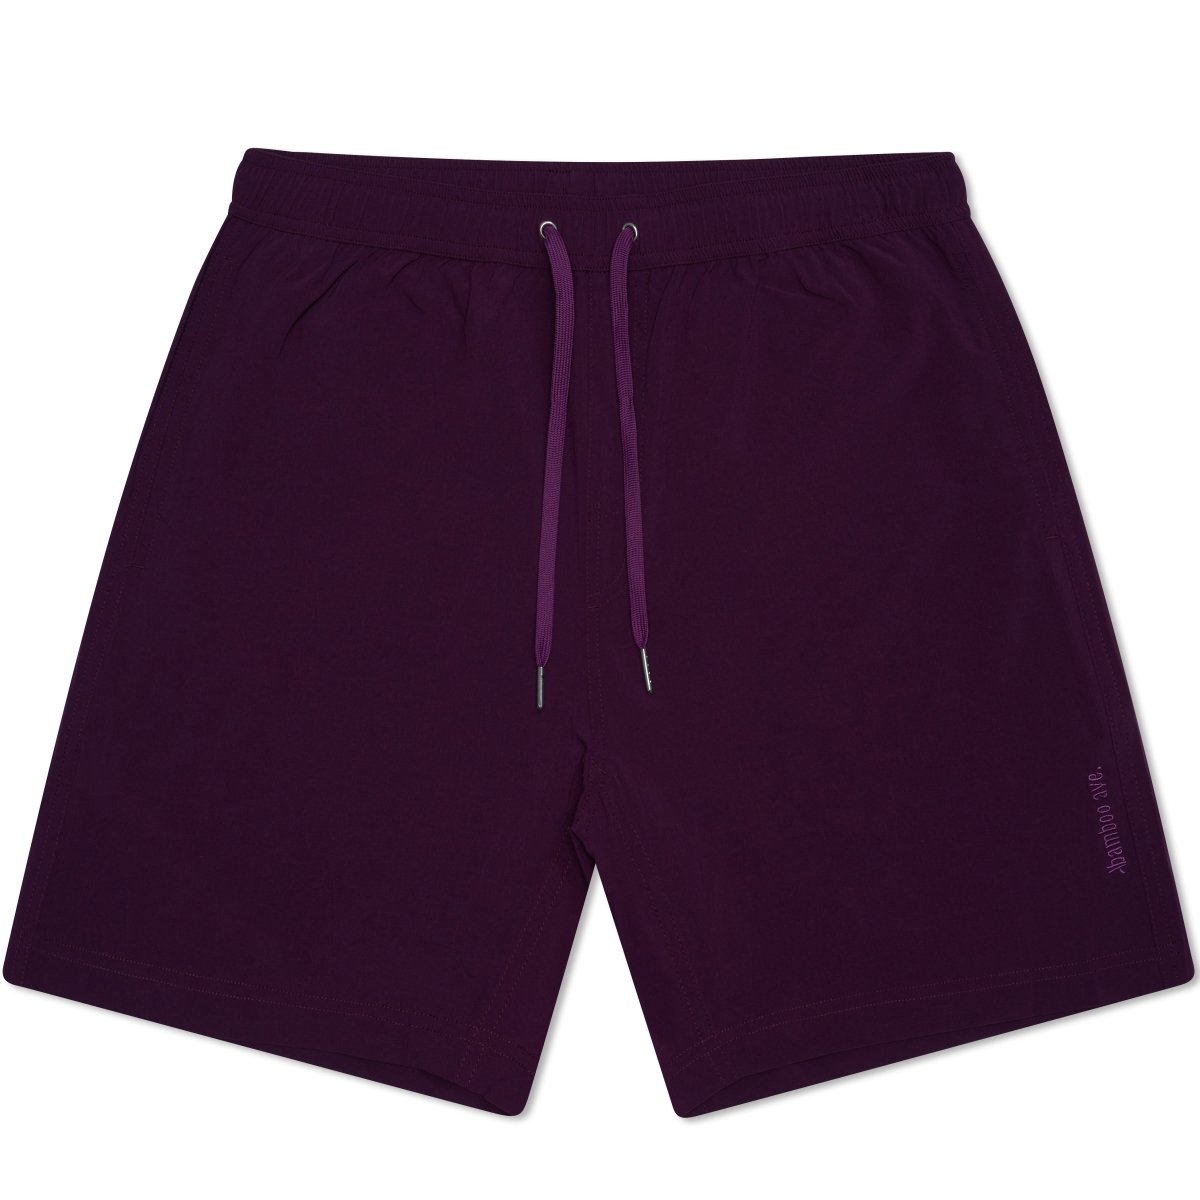 Big Shot 9” - Plum Shorts - Bamboo Ave. - Men's Shorts